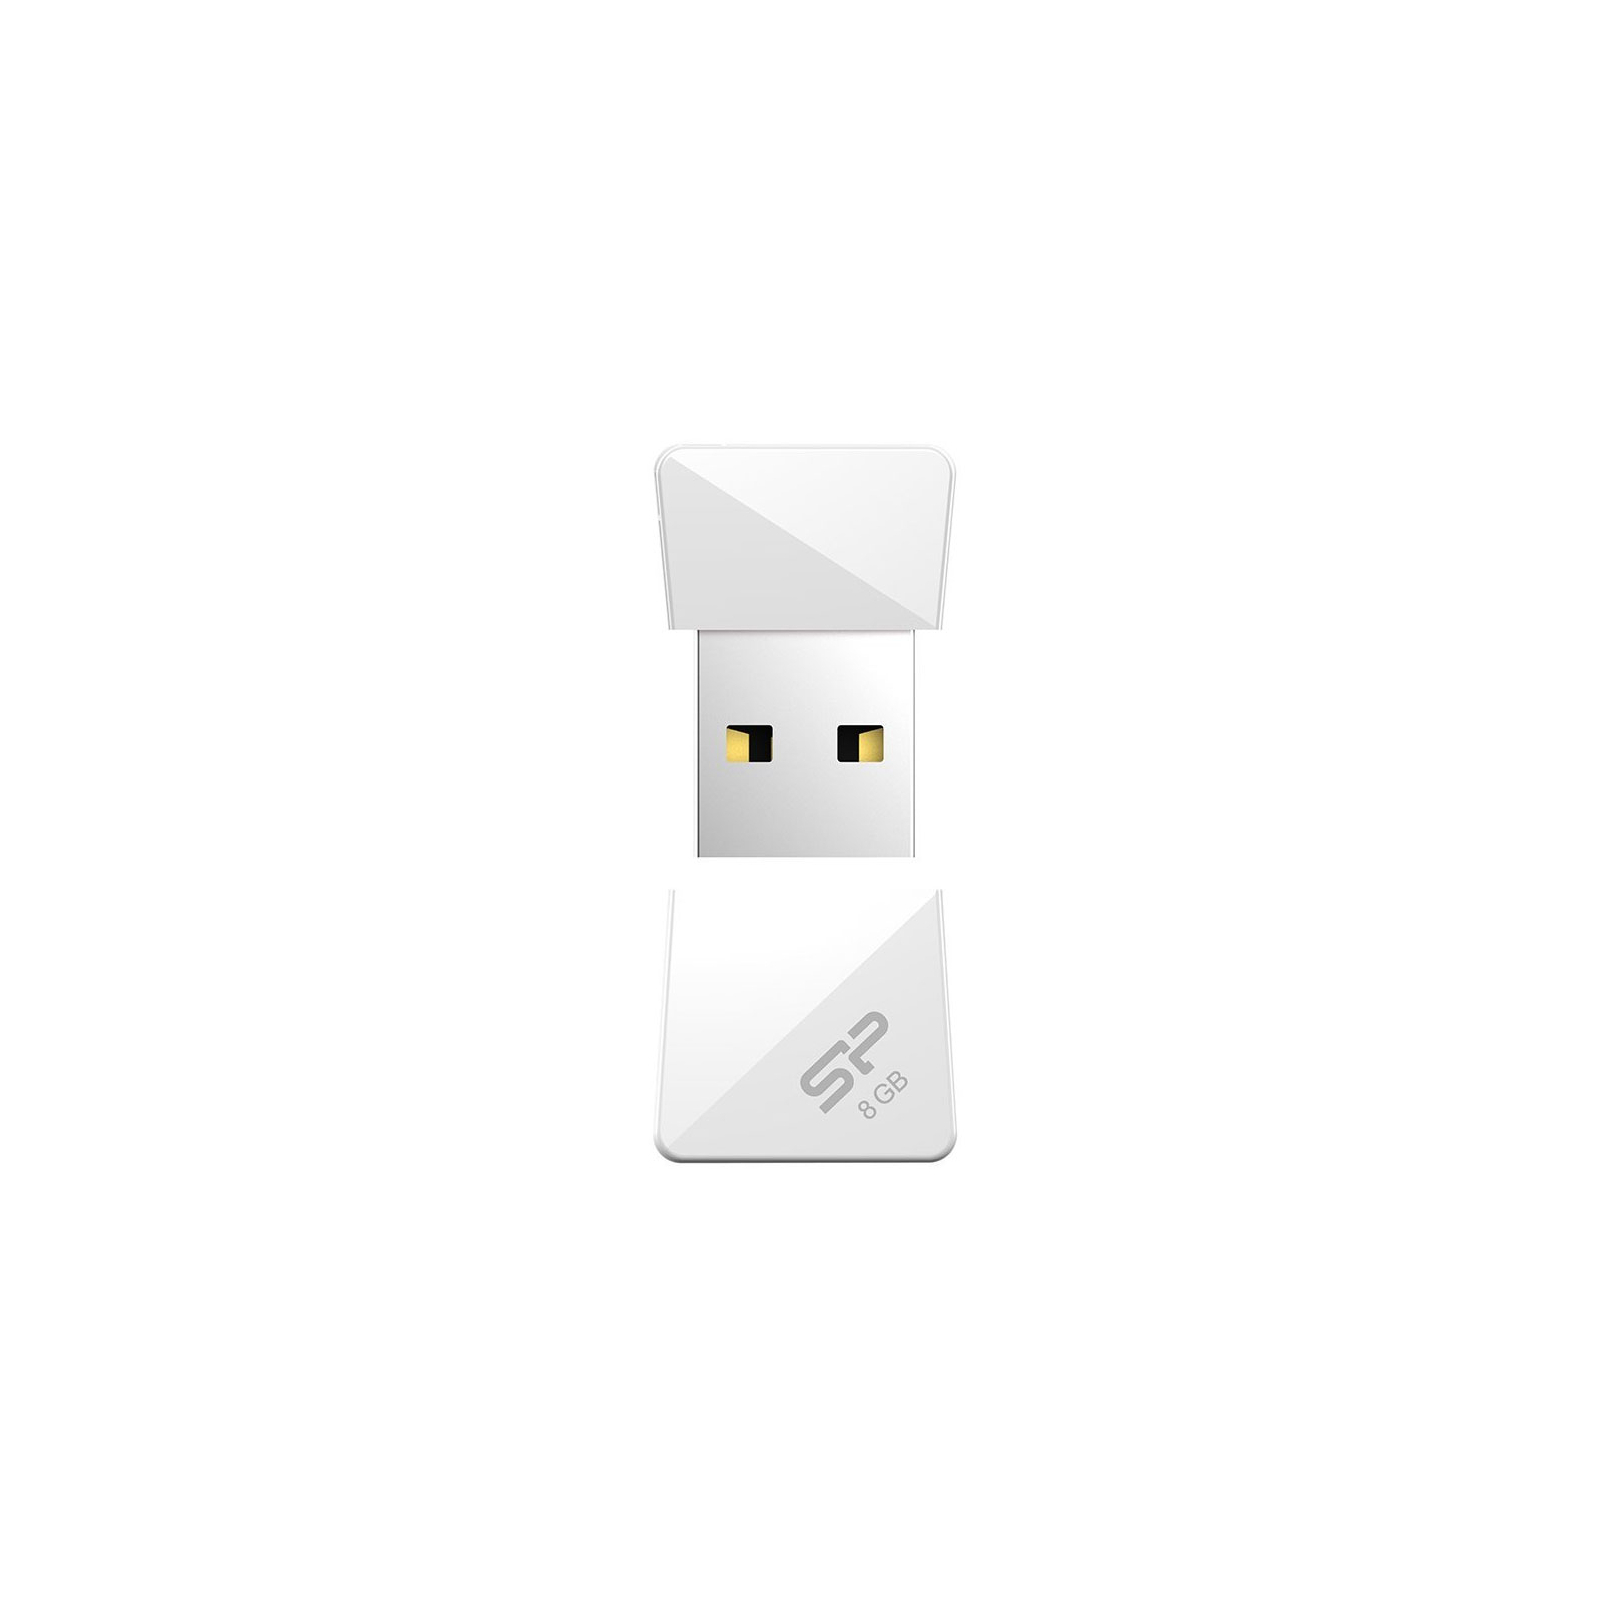 USB флеш накопитель Silicon Power 16Gb Touch T08 White USB 2.0 (SP016GBUF2T08V1W) изображение 3